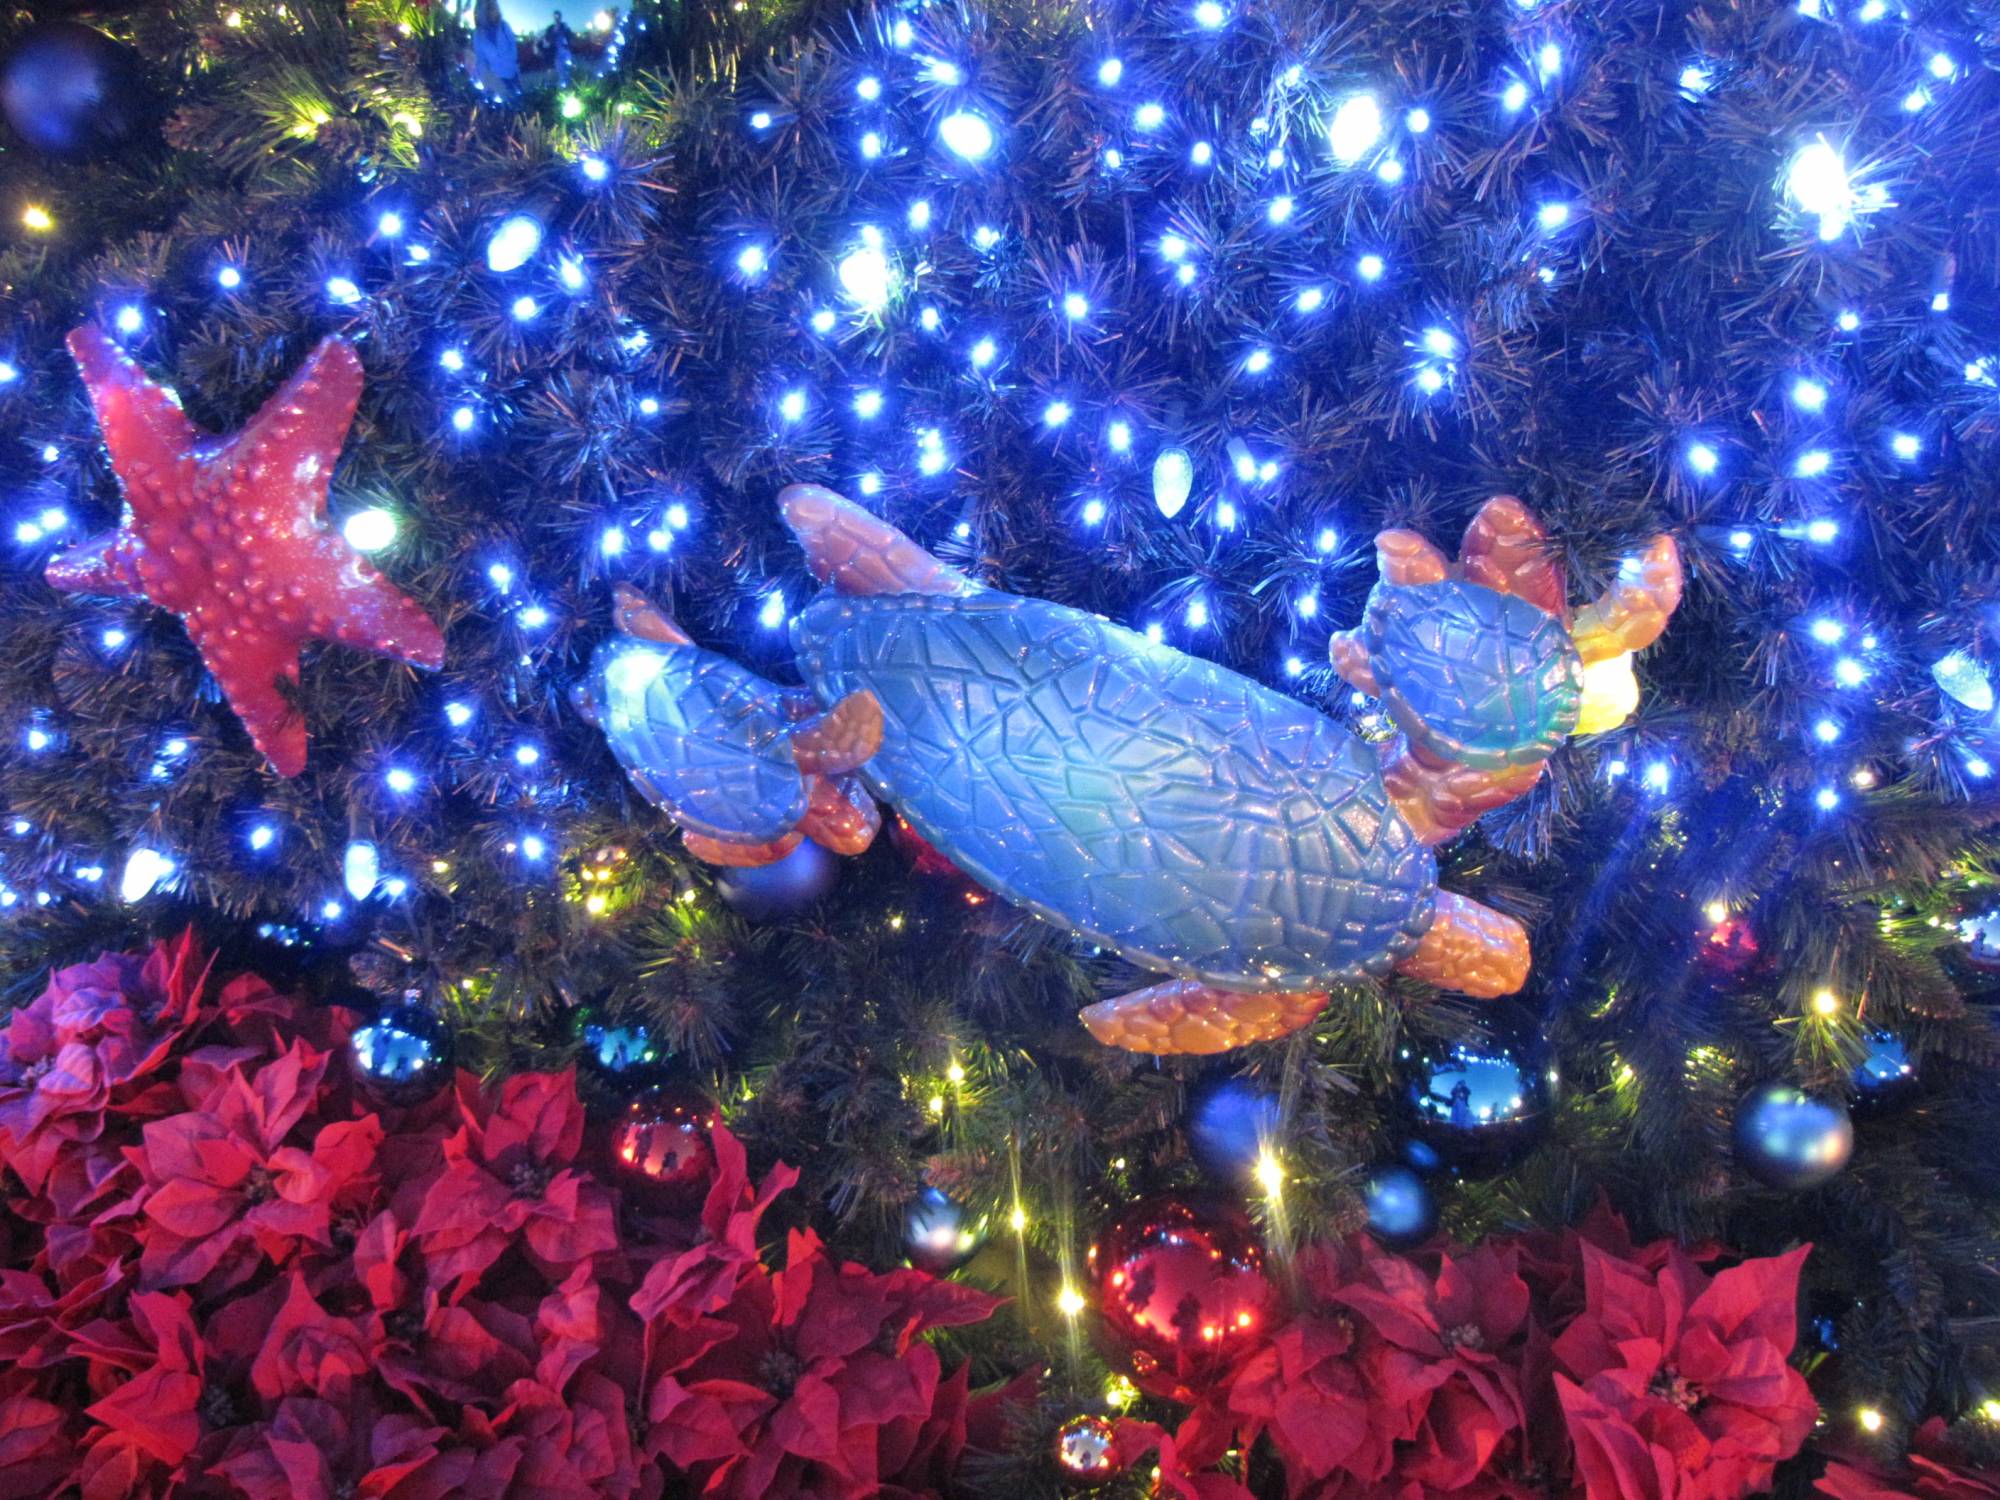 SeaWorld San Diego Christmas Celebration is a Joy to the World